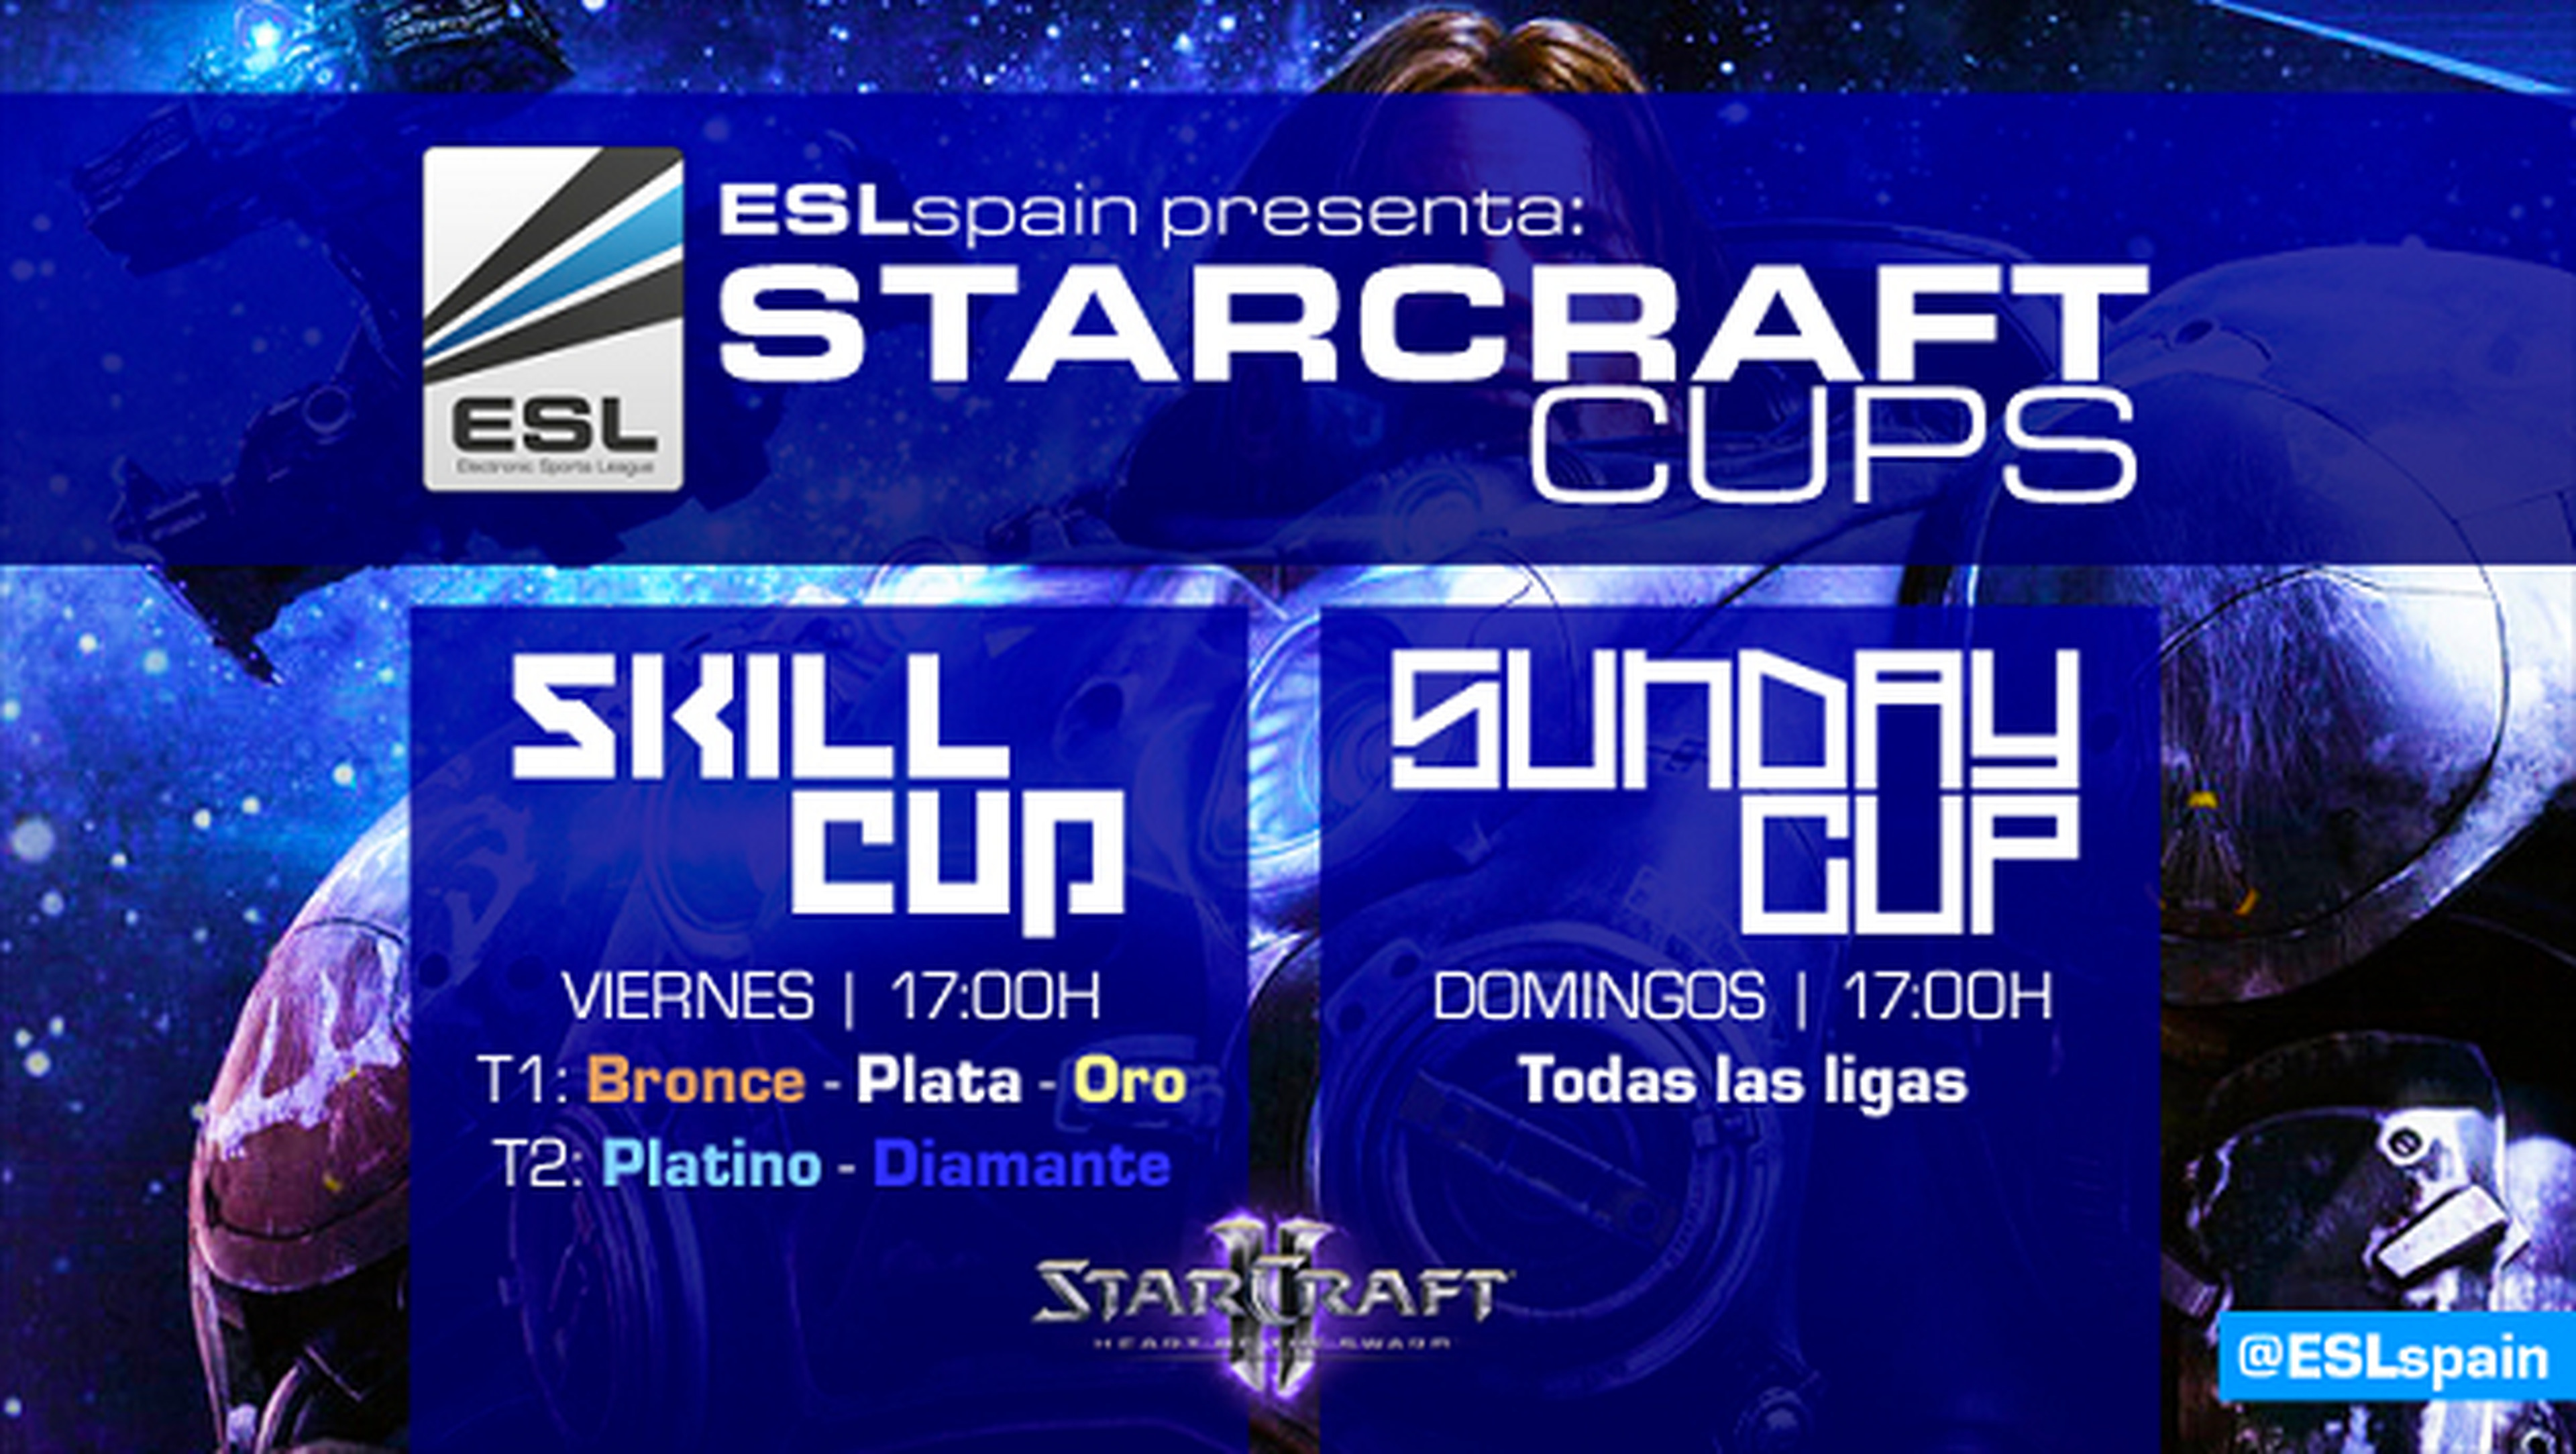 Starcraft II vuelve a la ESL